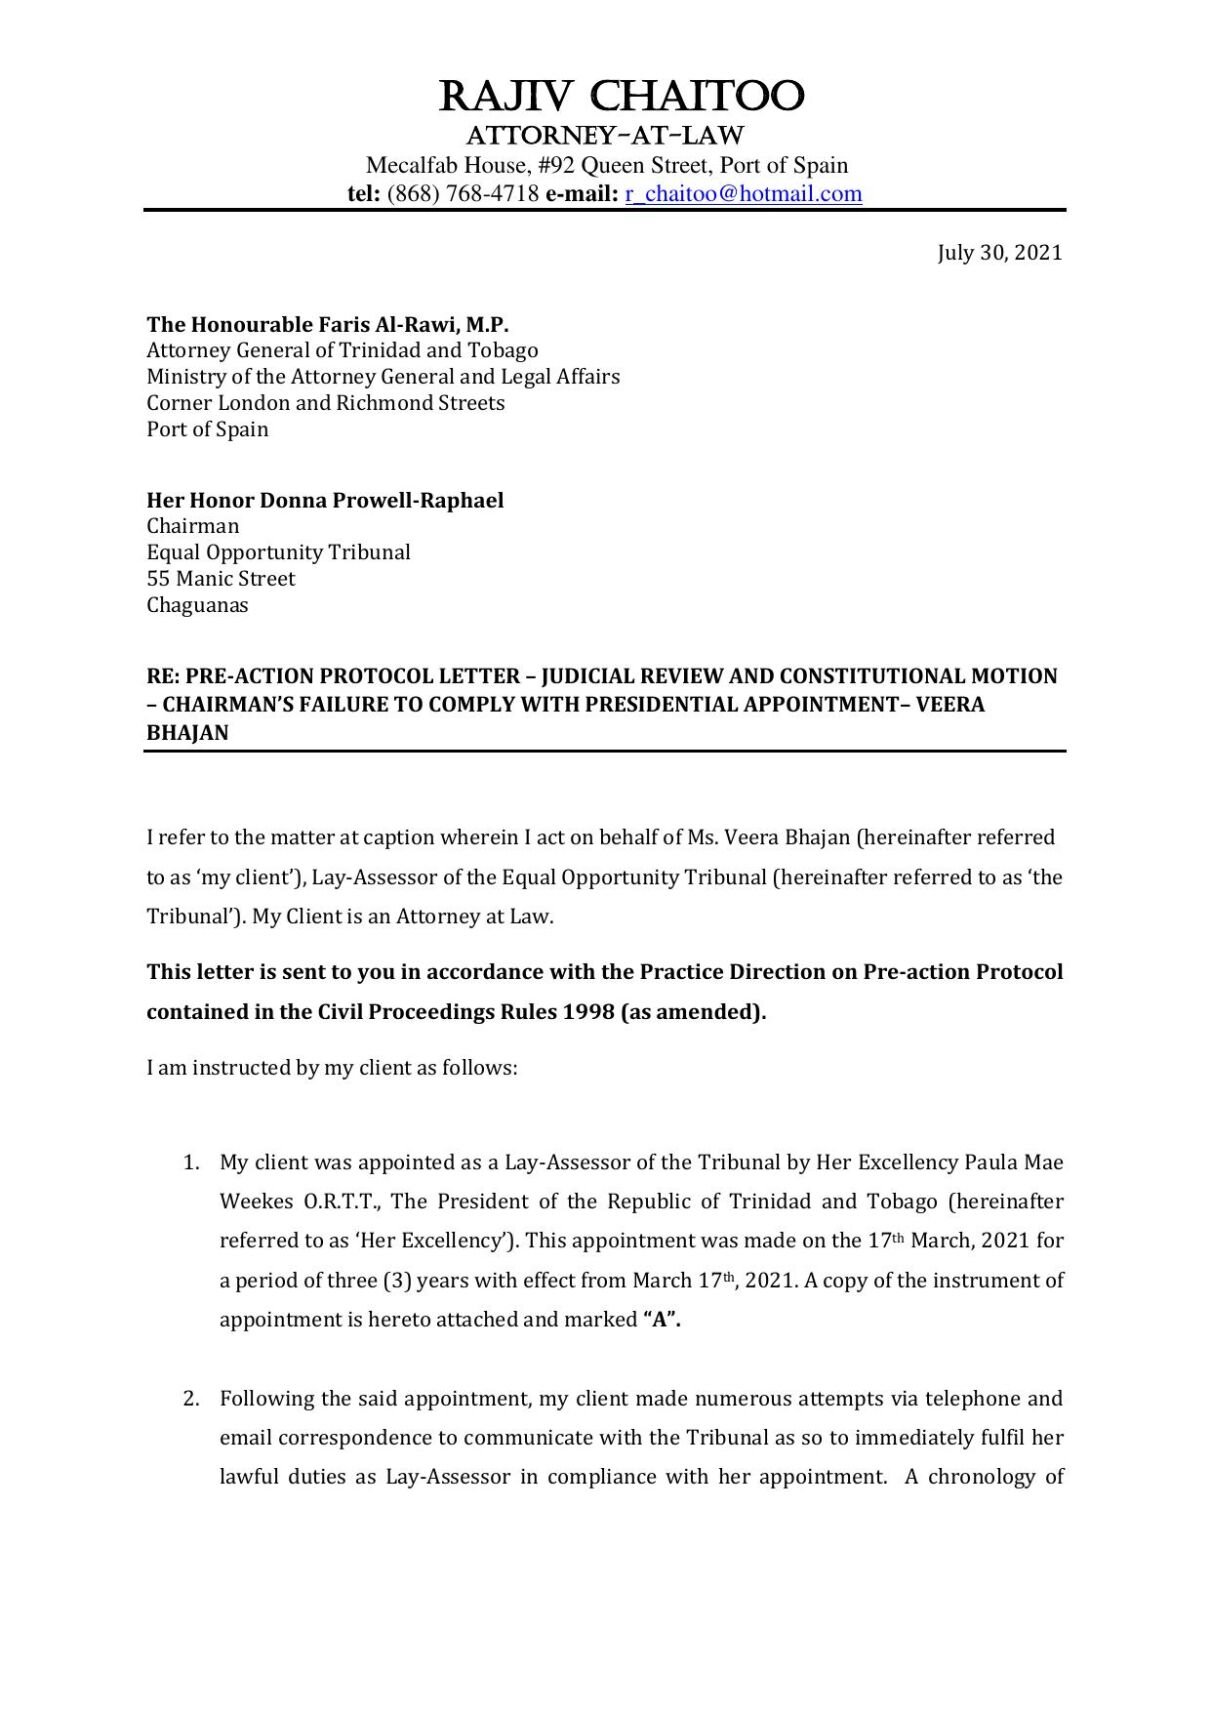 The pre action protocol letter trinidadexpress com